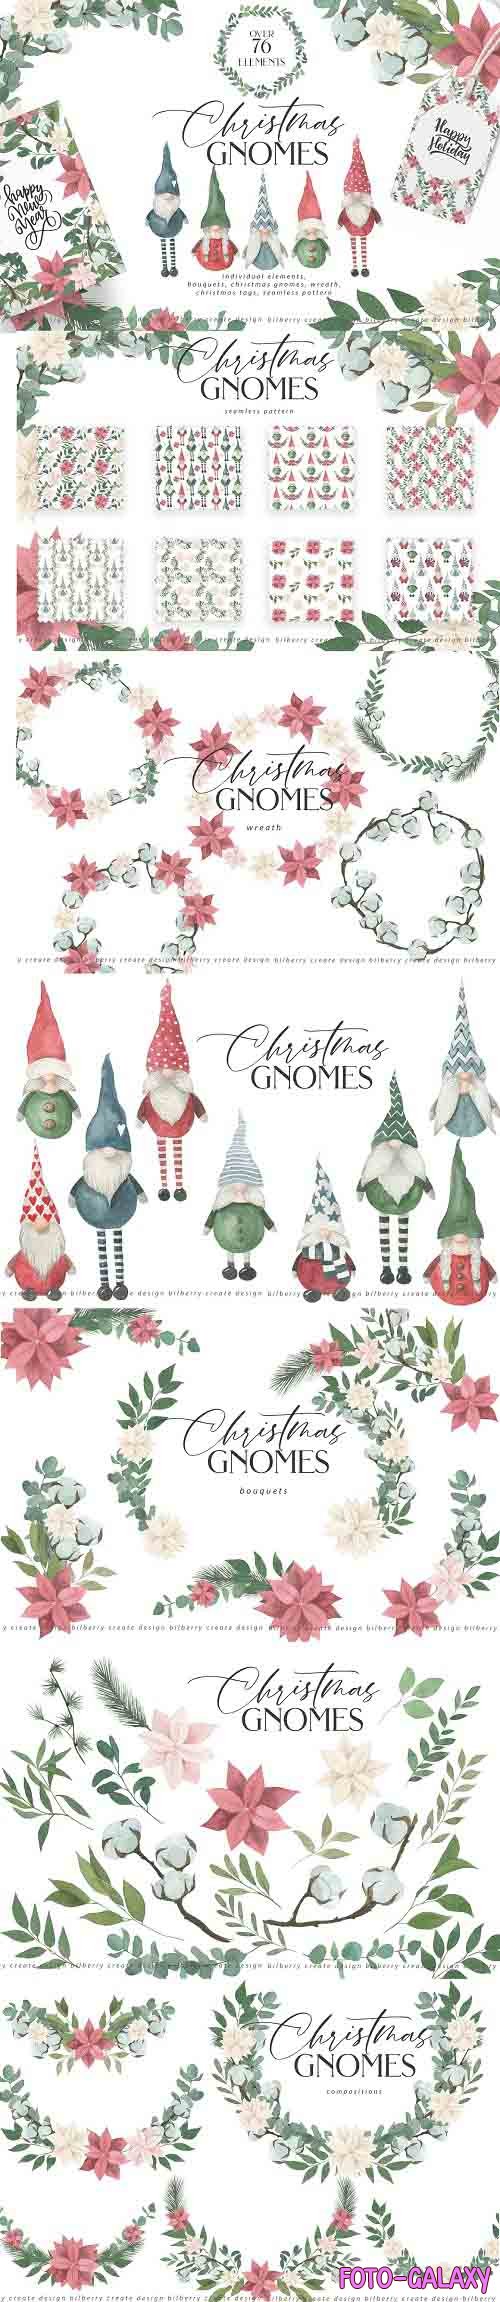 Christmas Gnomes art set - 5682492